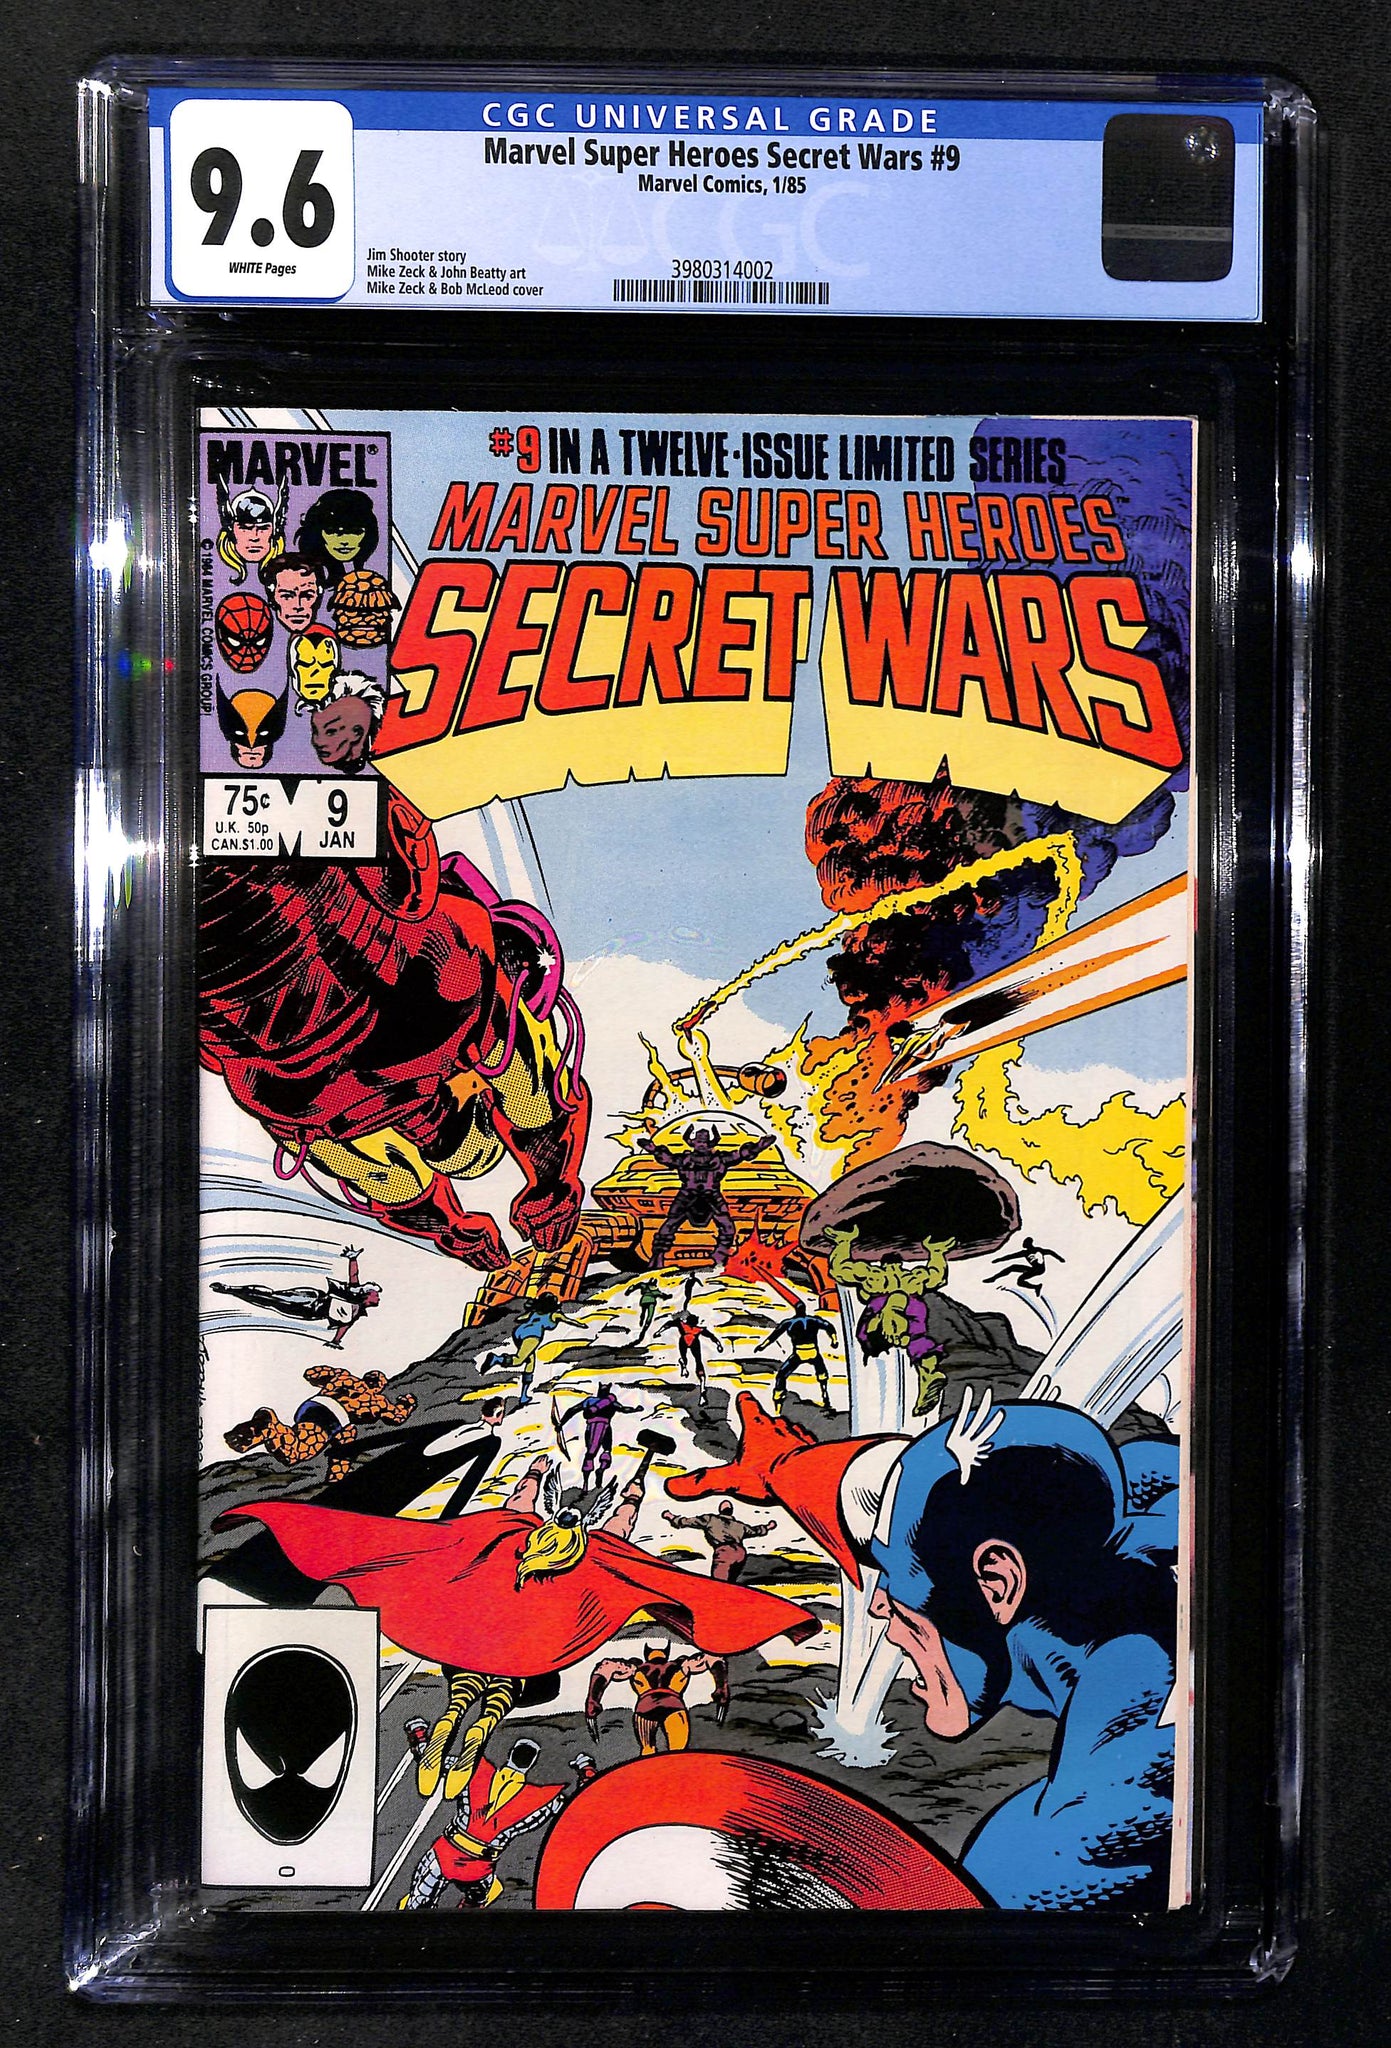 Marvel Super Heroes Secret Wars #9 CGC 9.6 White Pages